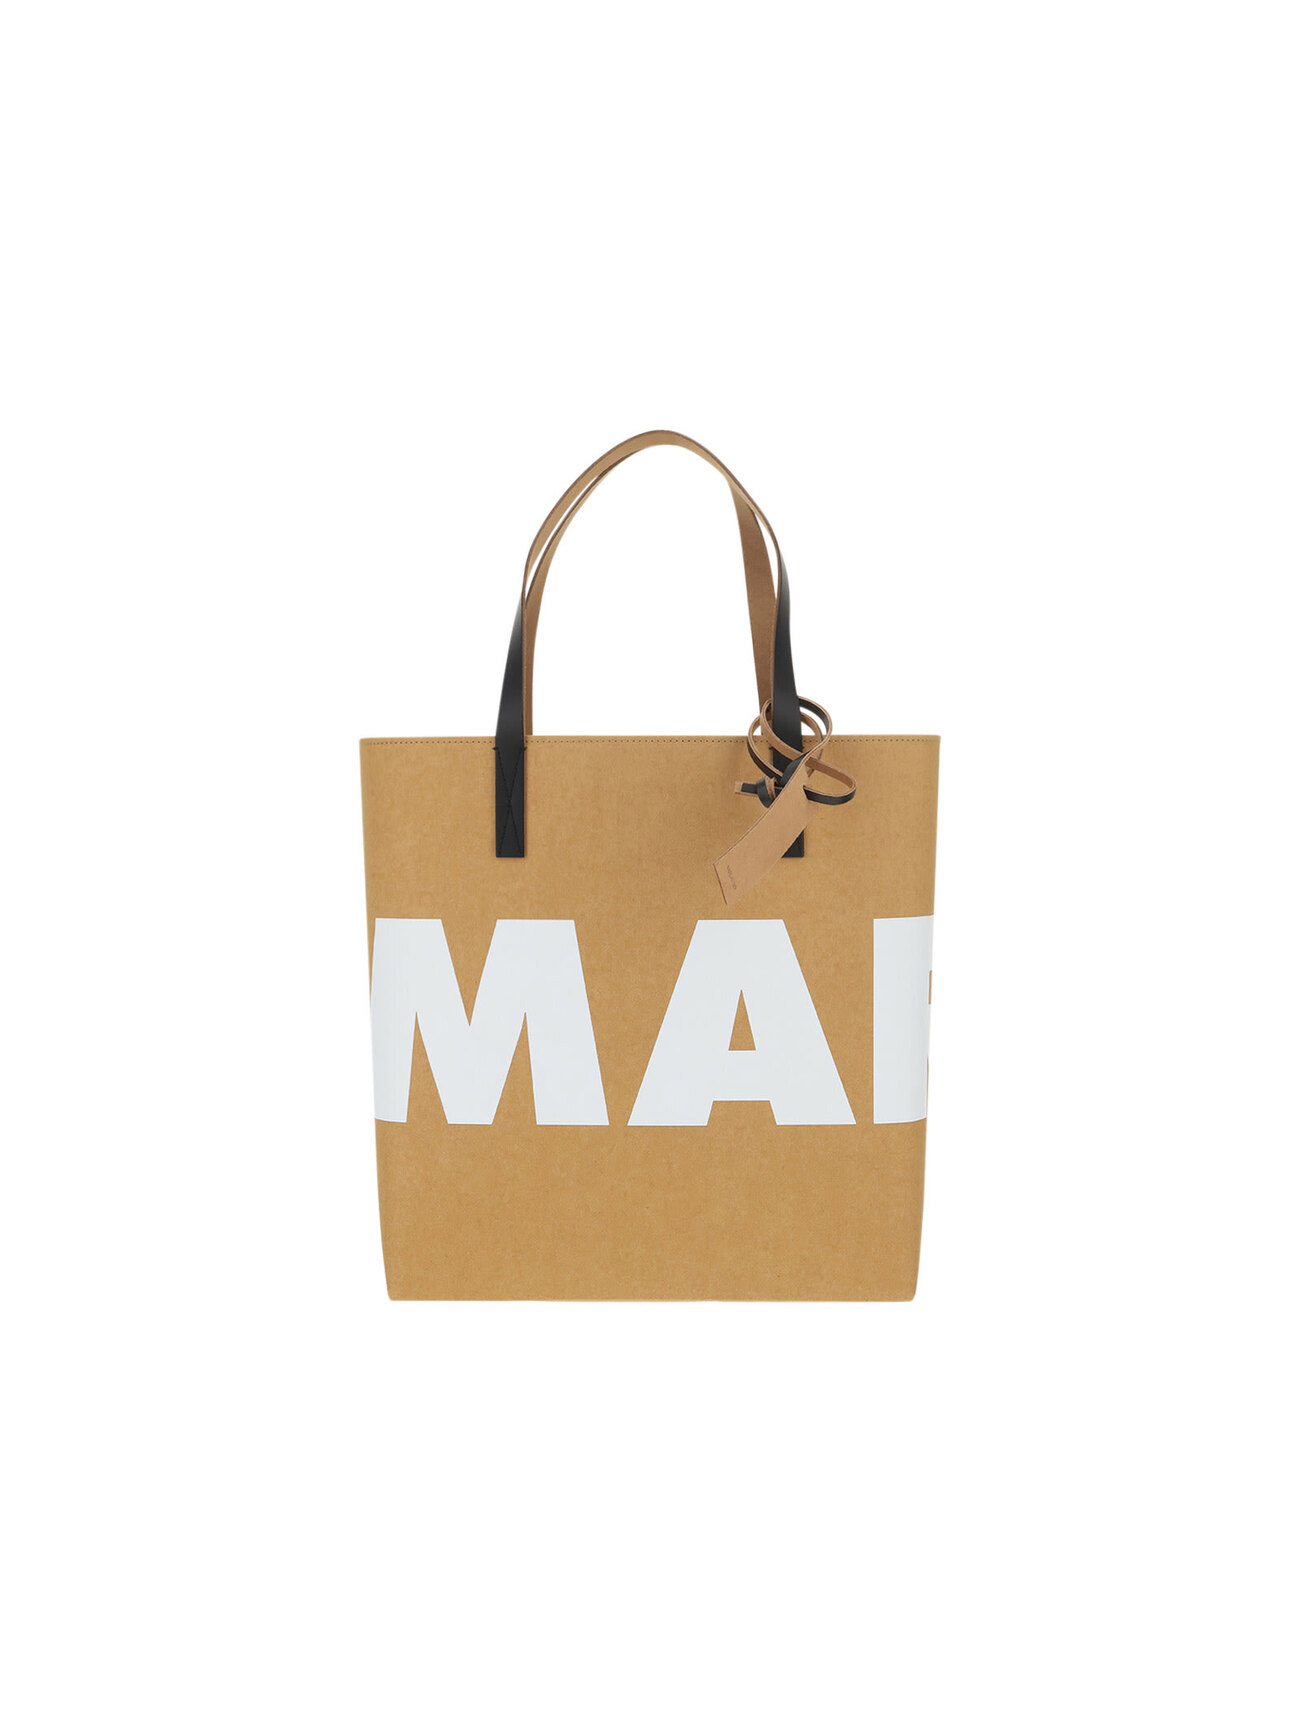 Marni Shopping Bag in brown